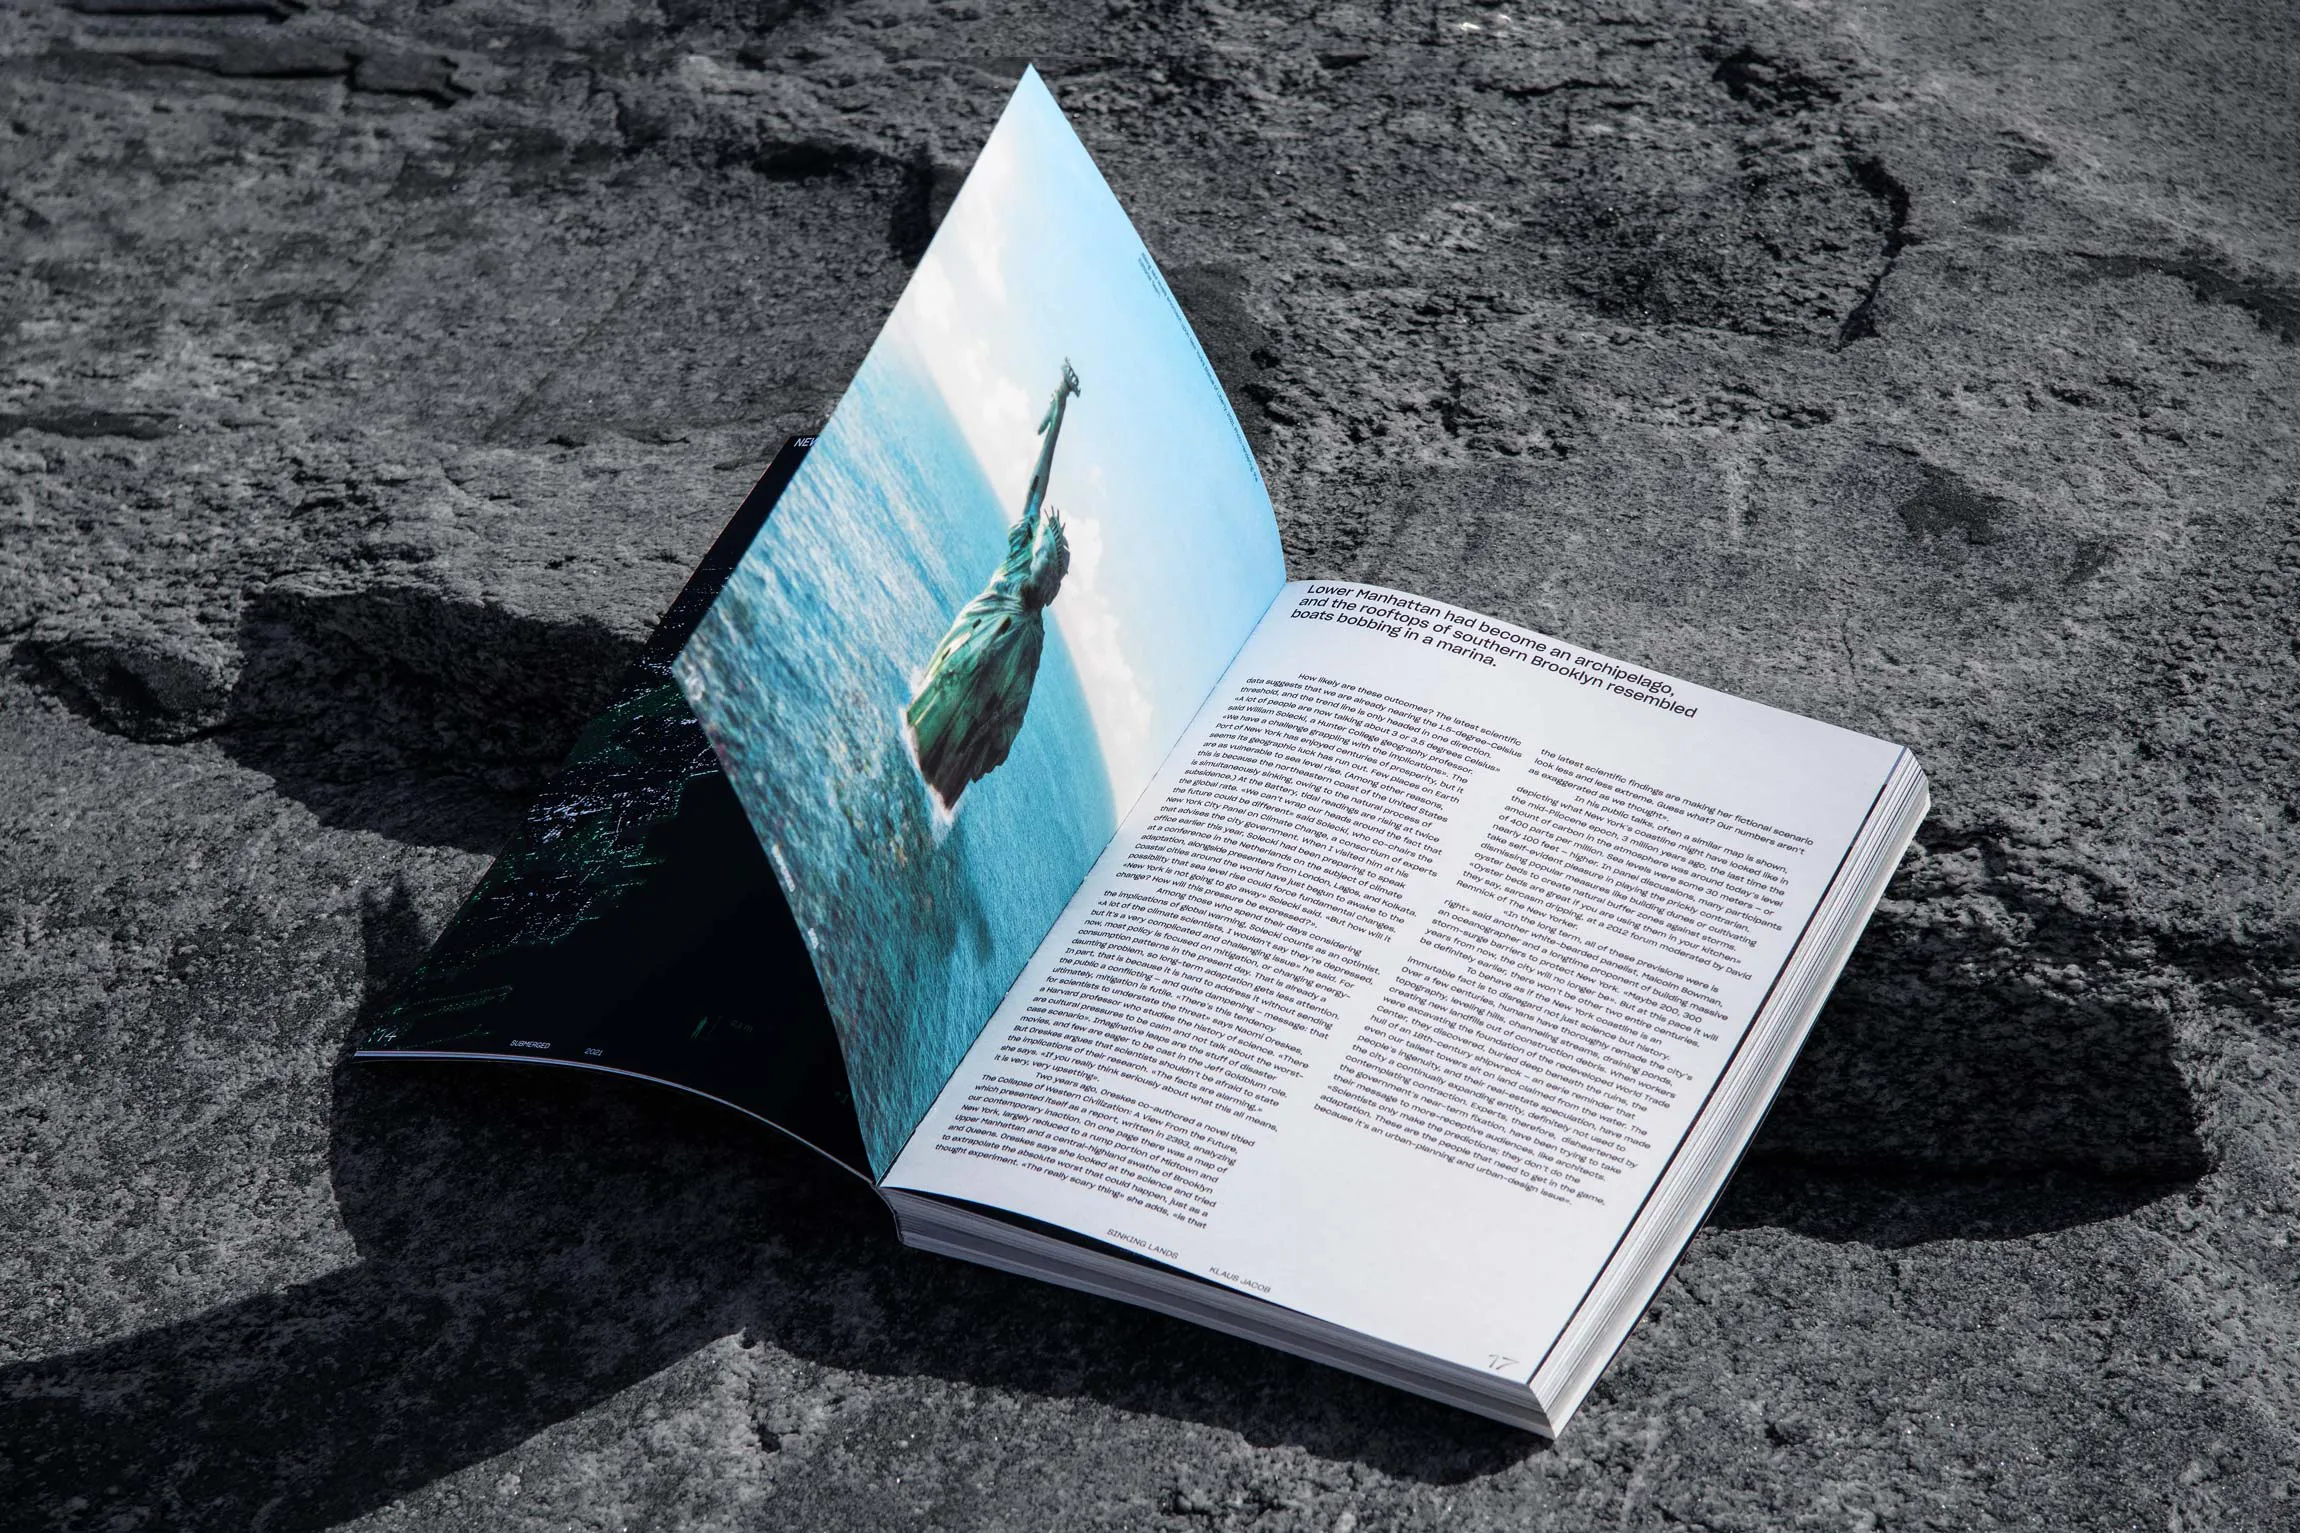  Submerged Magazine | Carlotta Bacchini